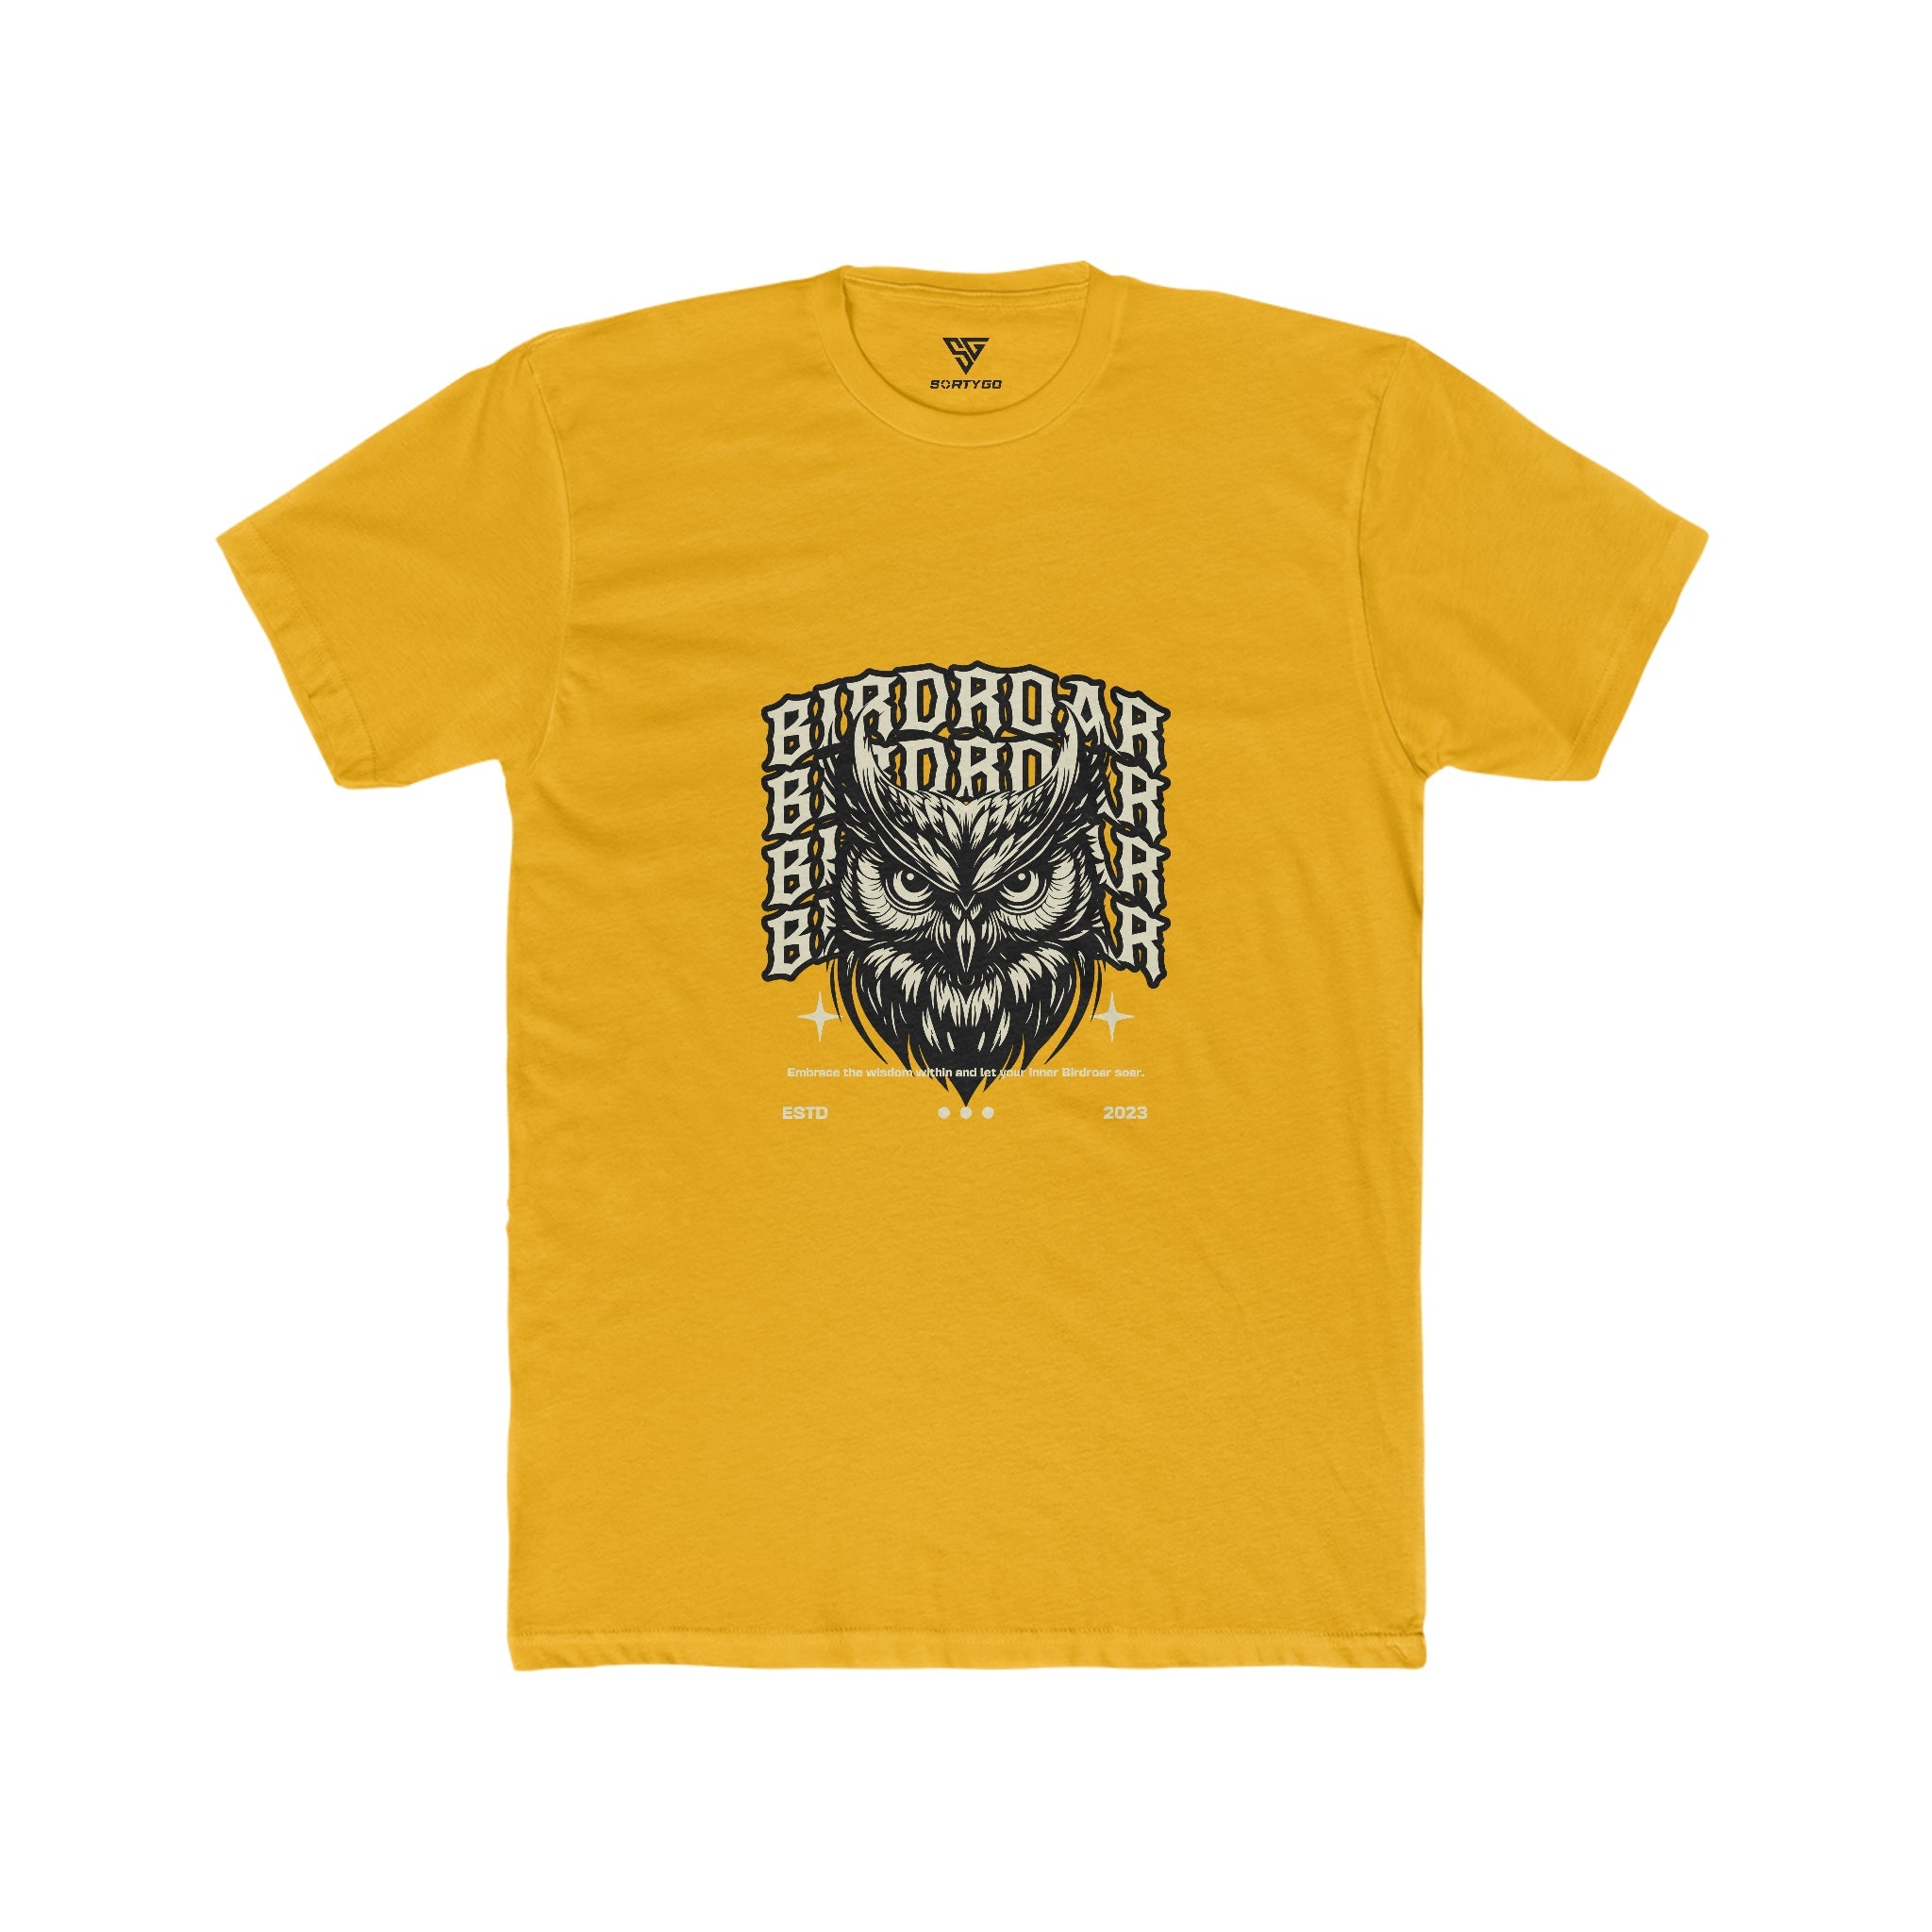 SORTYGO - Birdroar Men Fitted T-Shirt in Solid Gold